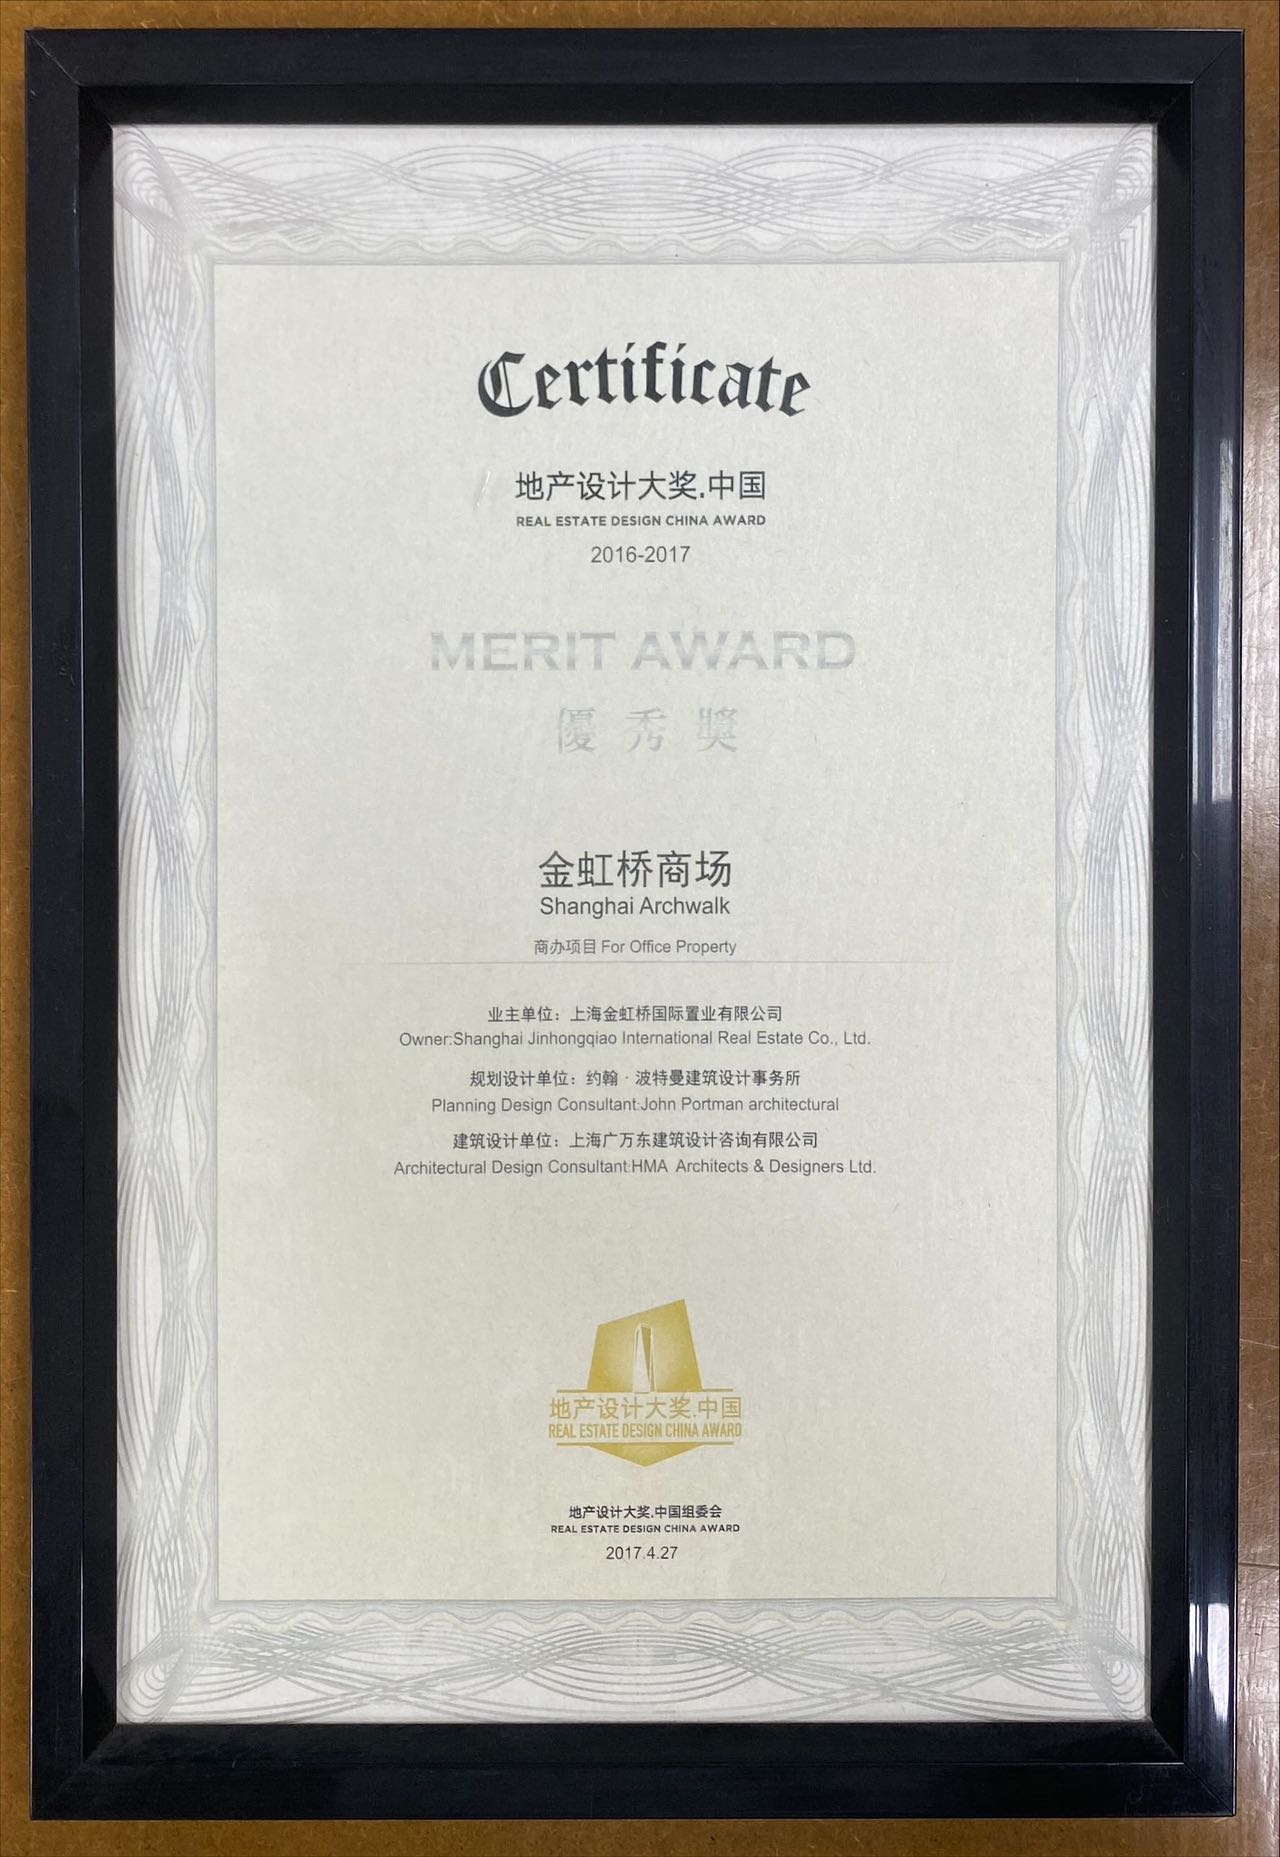 Real Estate Design China Award 2016-2017 Merit Award